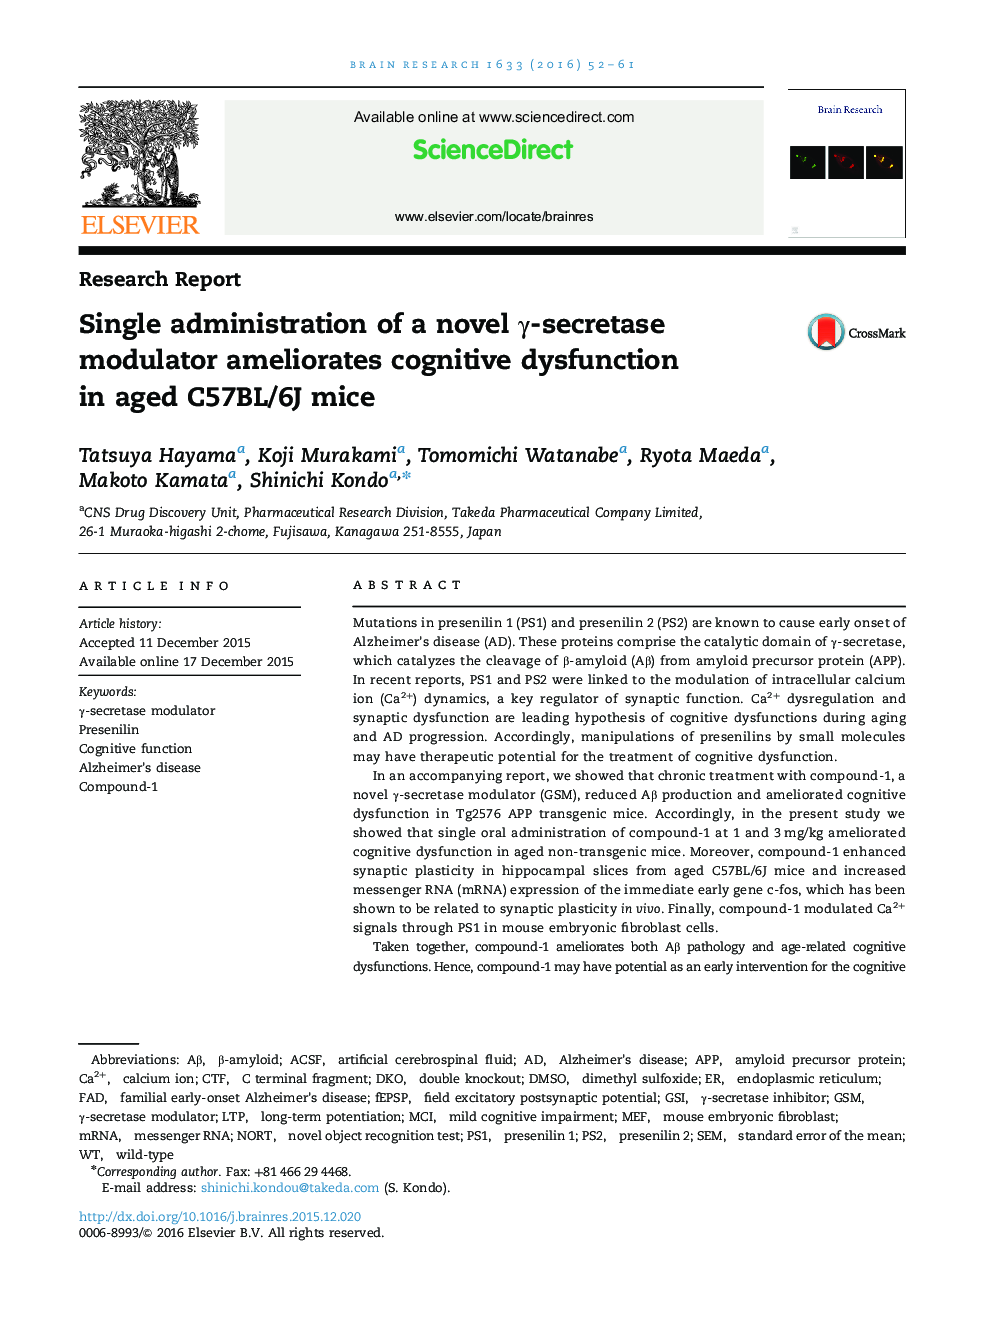 Single administration of a novel γ-secretase modulator ameliorates cognitive dysfunction in aged C57BL/6J mice